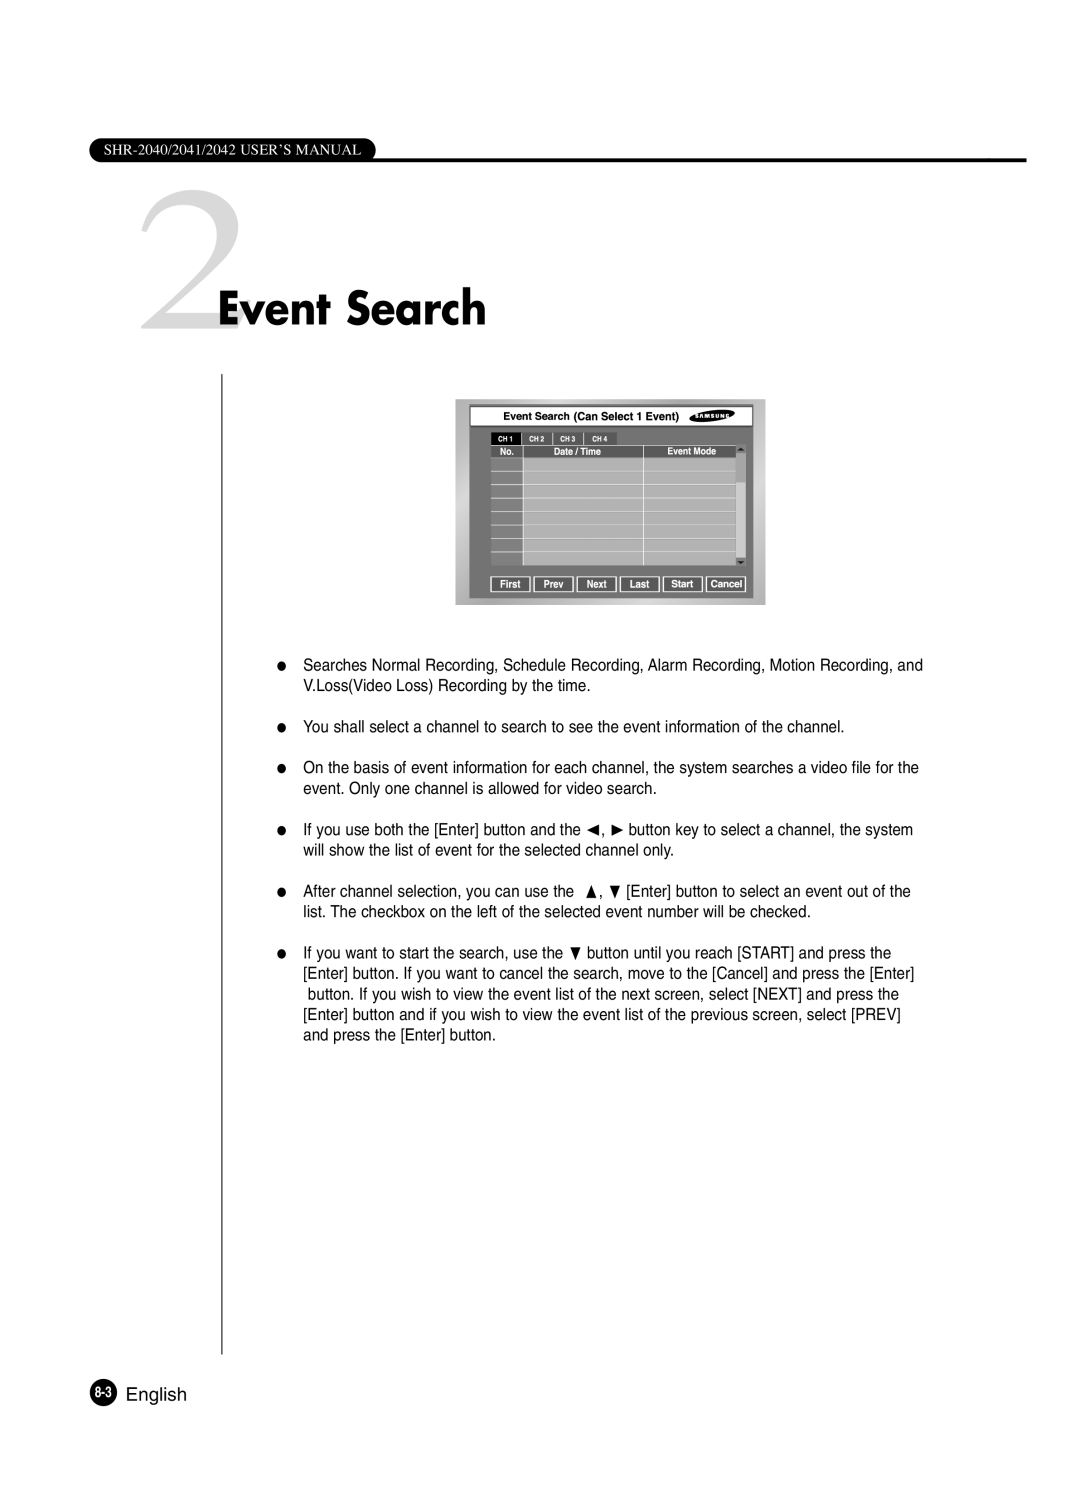 Samsung SHR-2042P250, SHR-2040P250 manual 2Event Search, English 